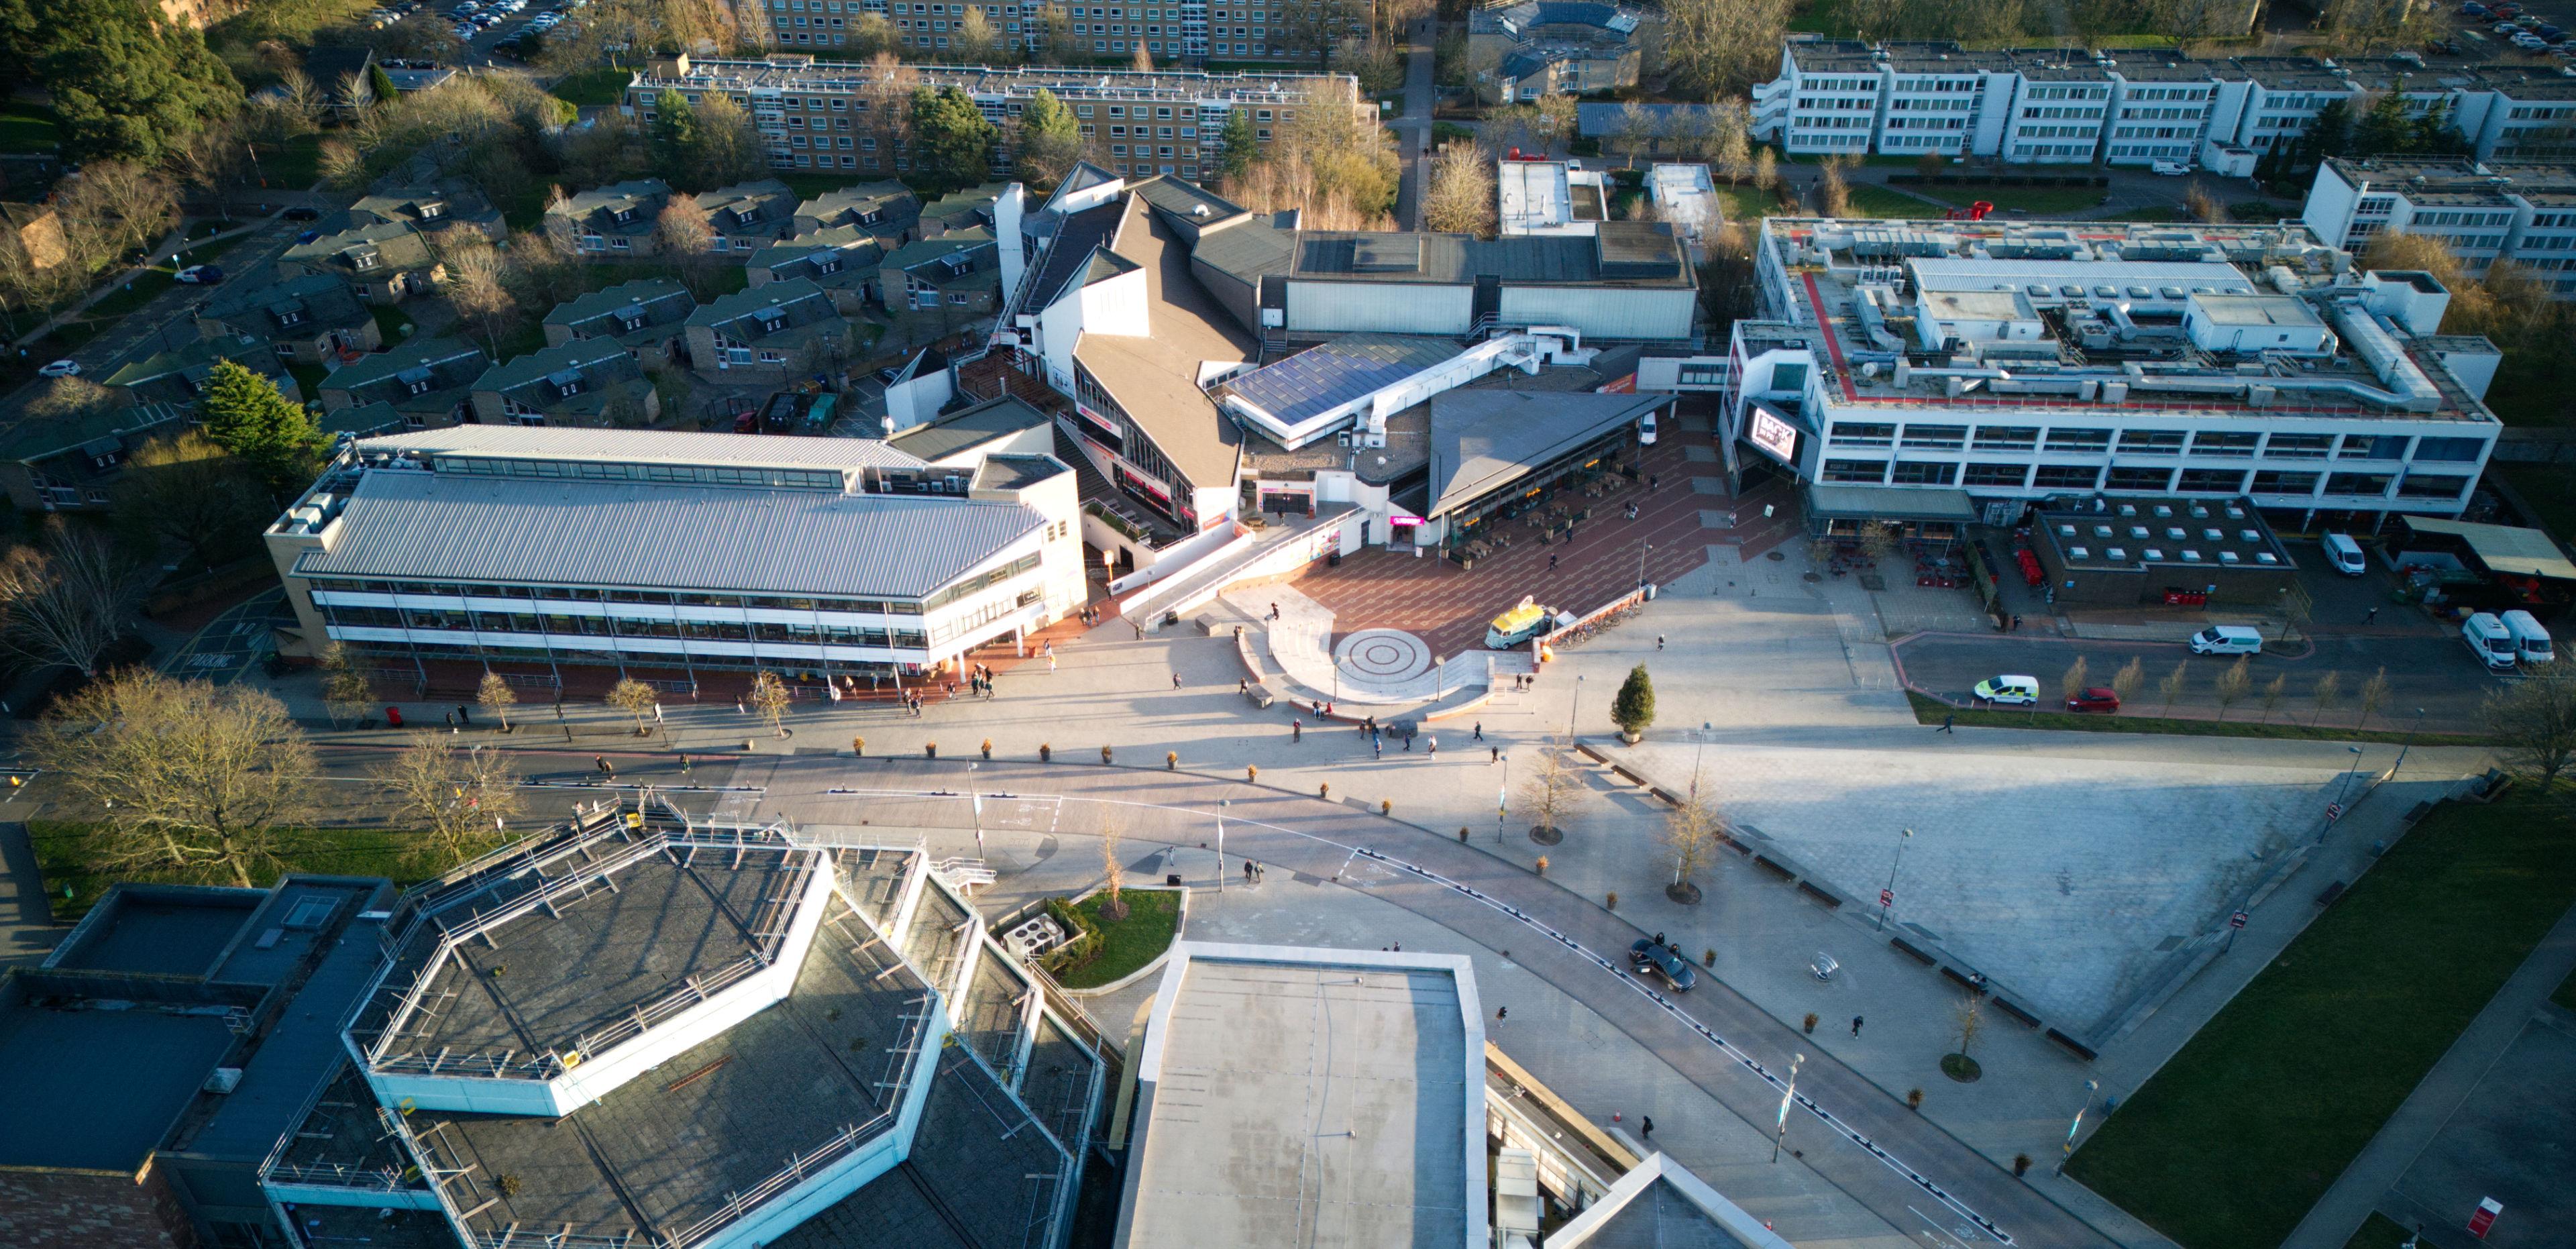 Aerial shot of the Warwick University piazza